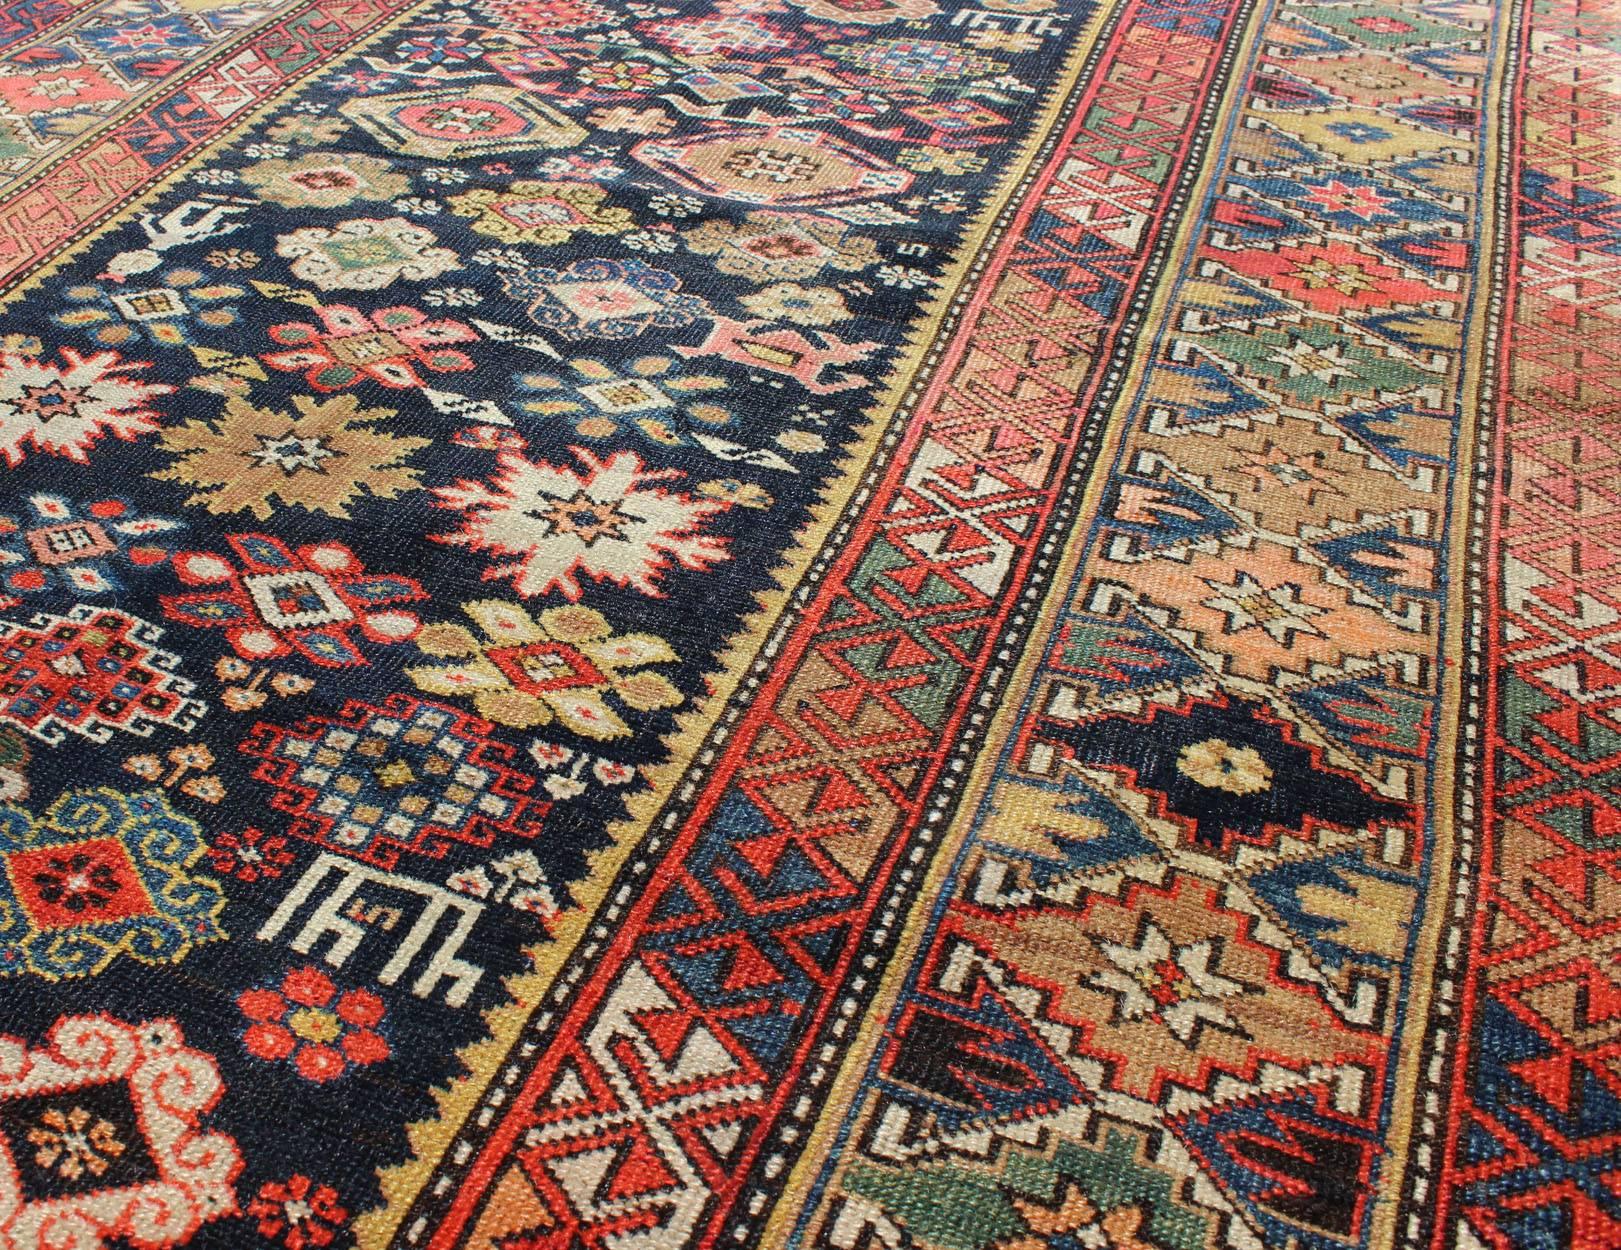 Kazak Colorful Antique Kuba Carpet with Intricate Geometric Design For Sale